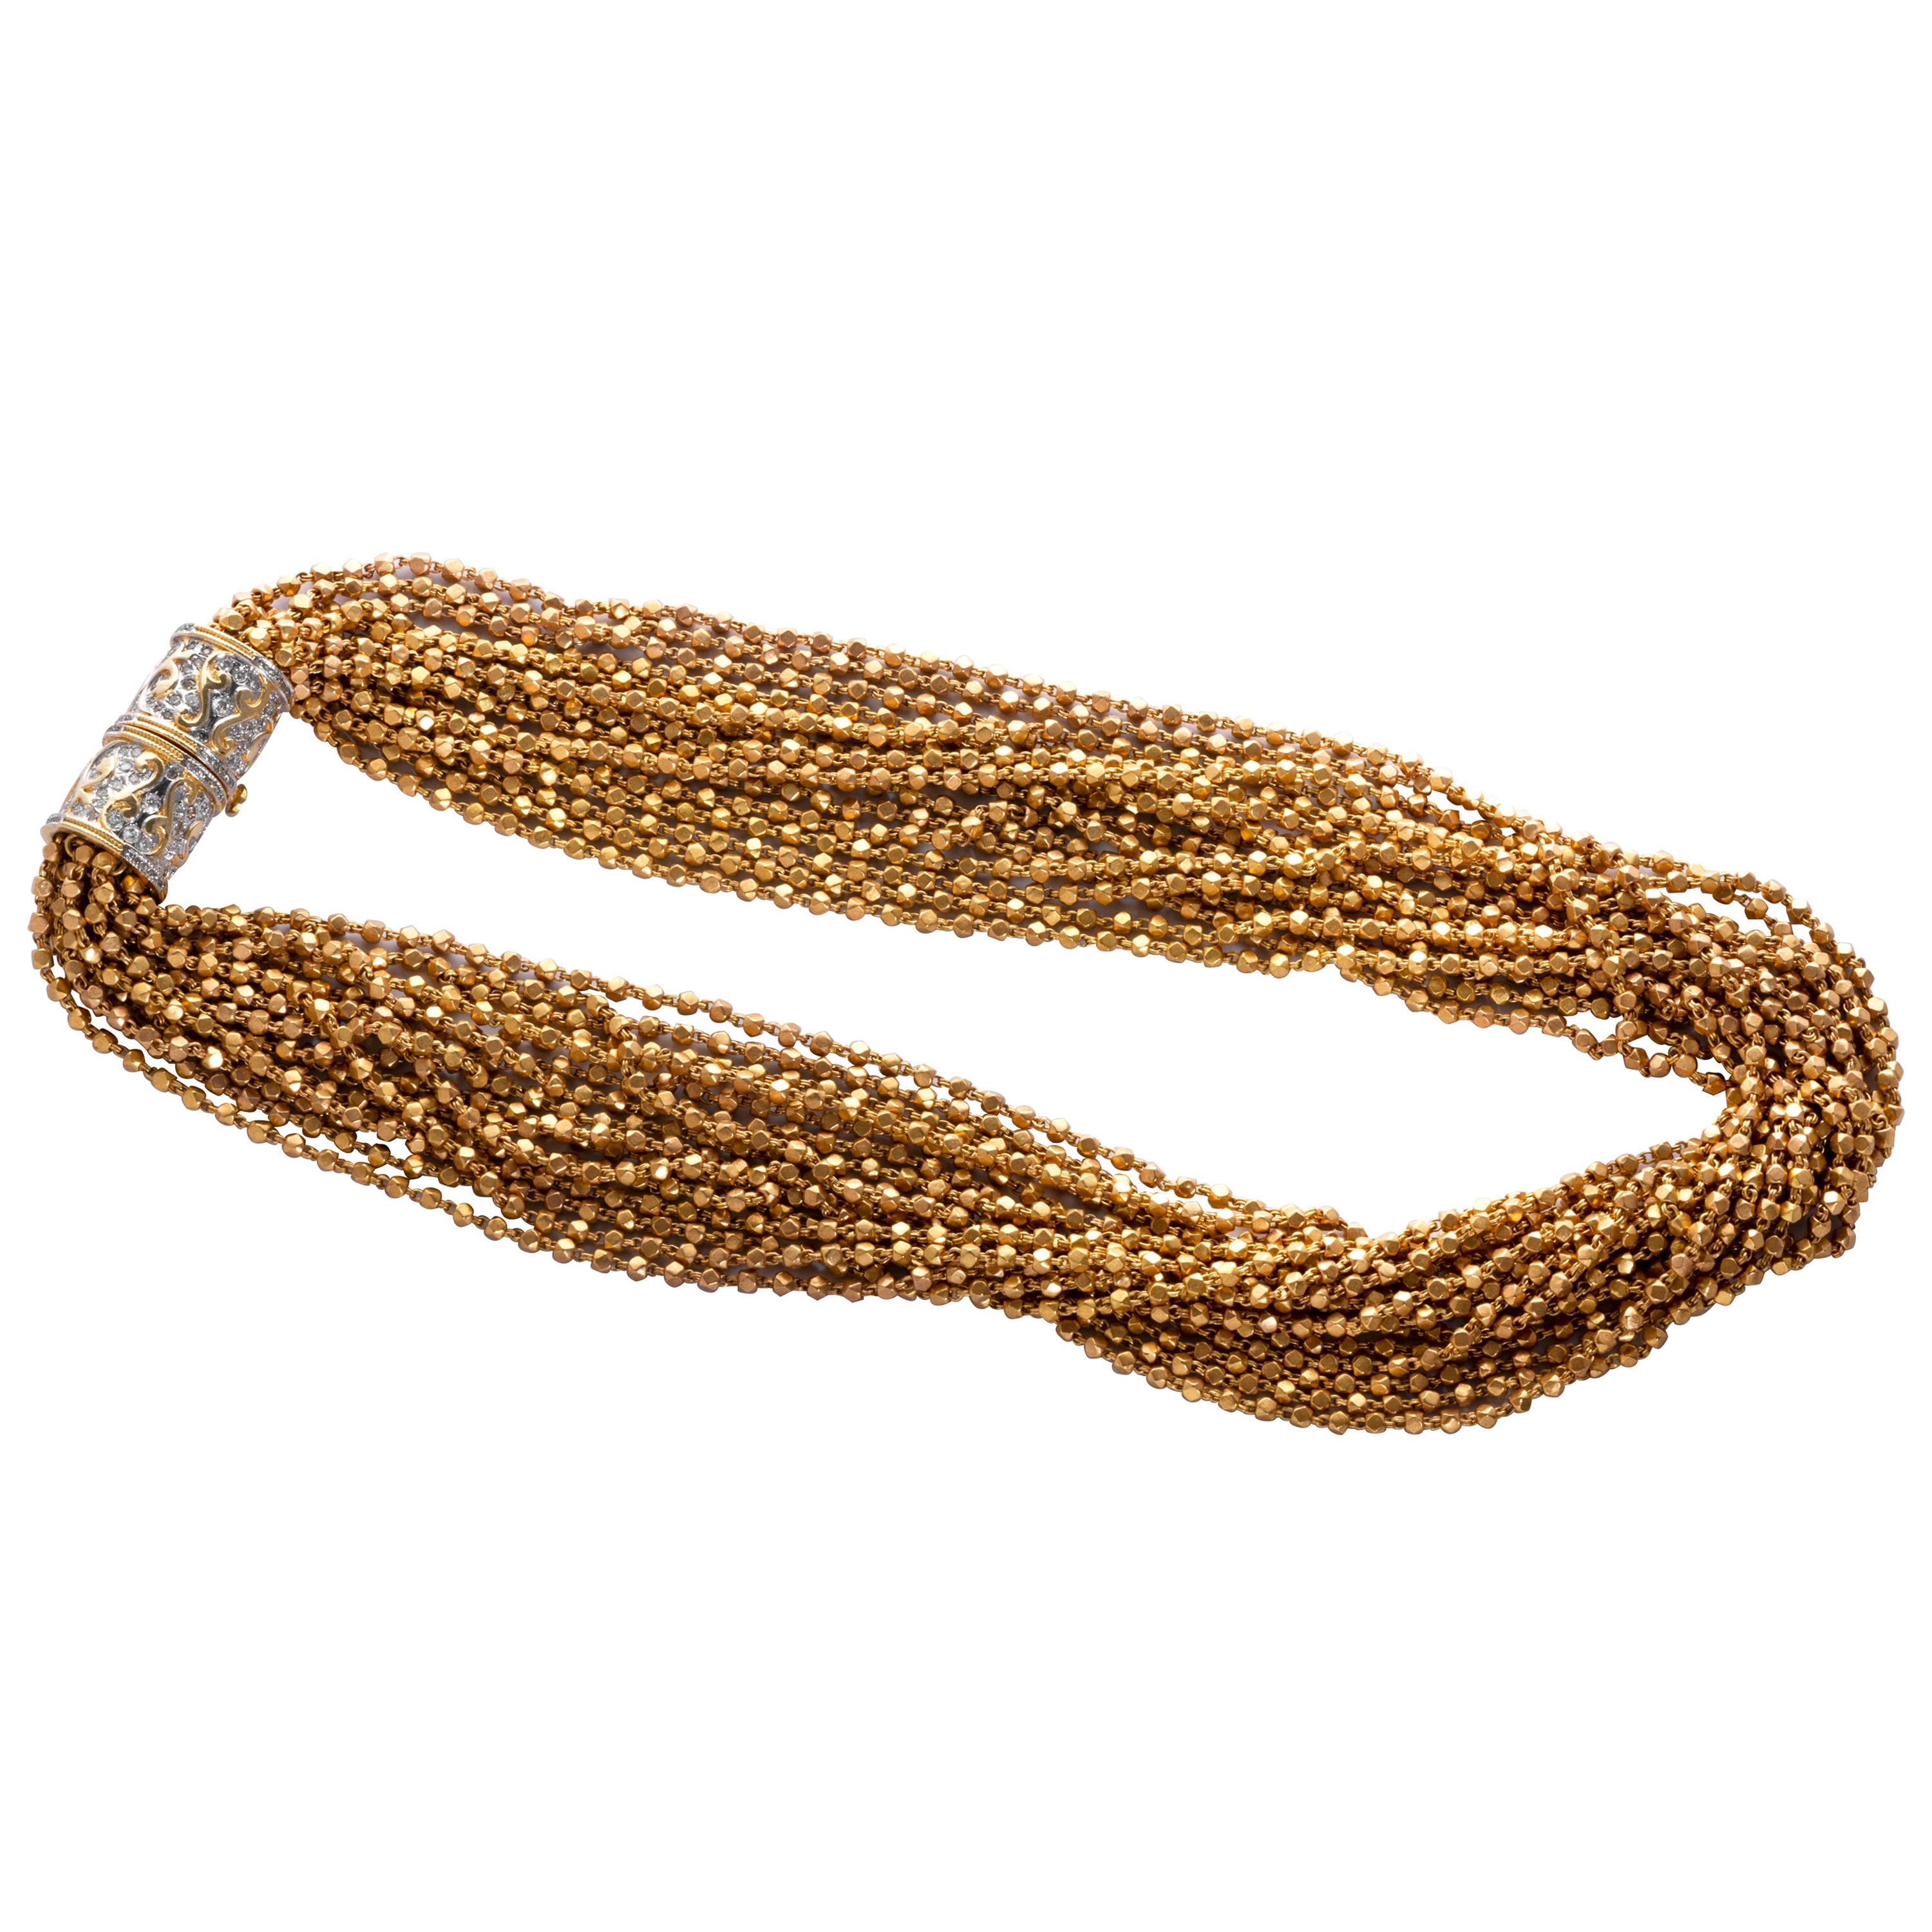 22 Karat Yellow Gold Detachable Necklace with 18 Karat Gold Diamond Clasps